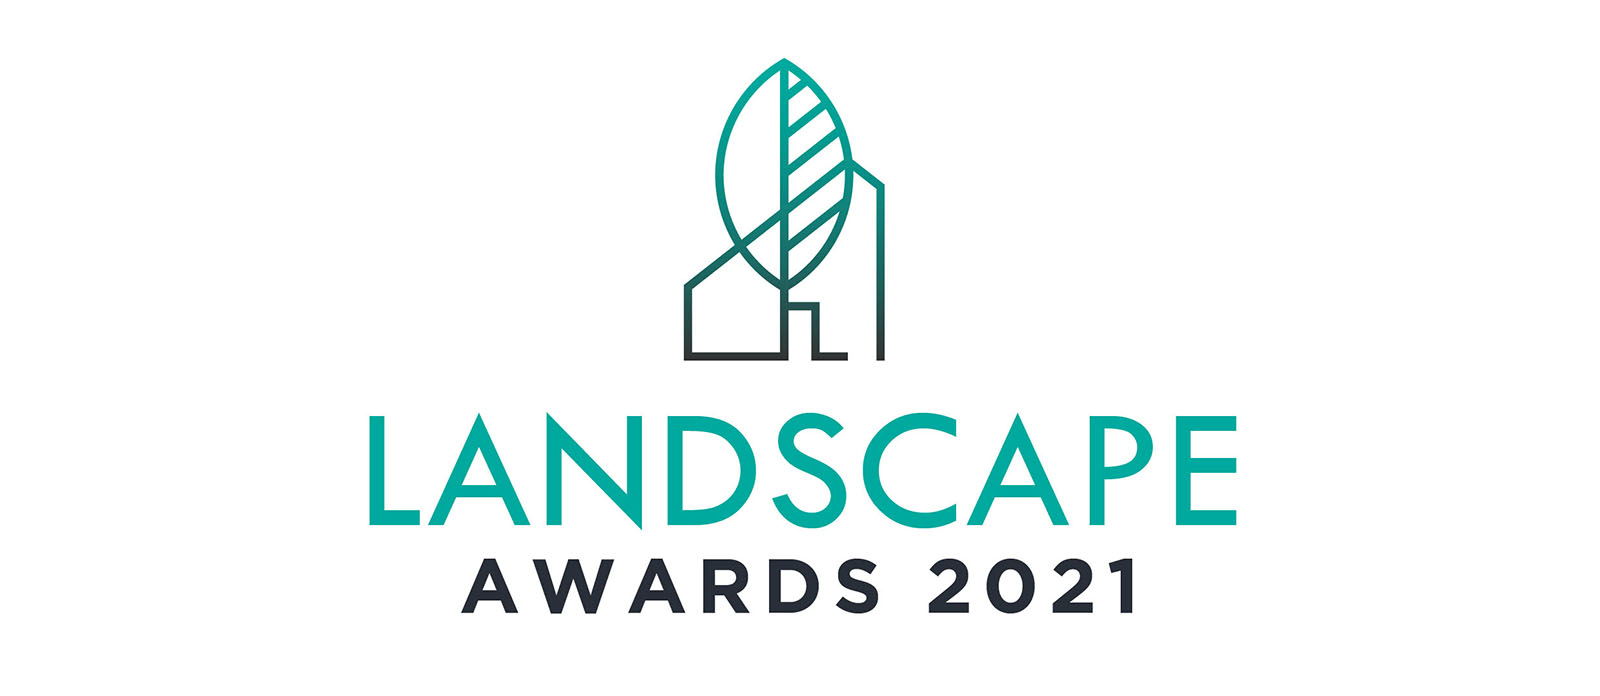 Landscape Awards 2021 Ενισχύοντας τους δεσμούς μεταξύ φύσης, χώρου και